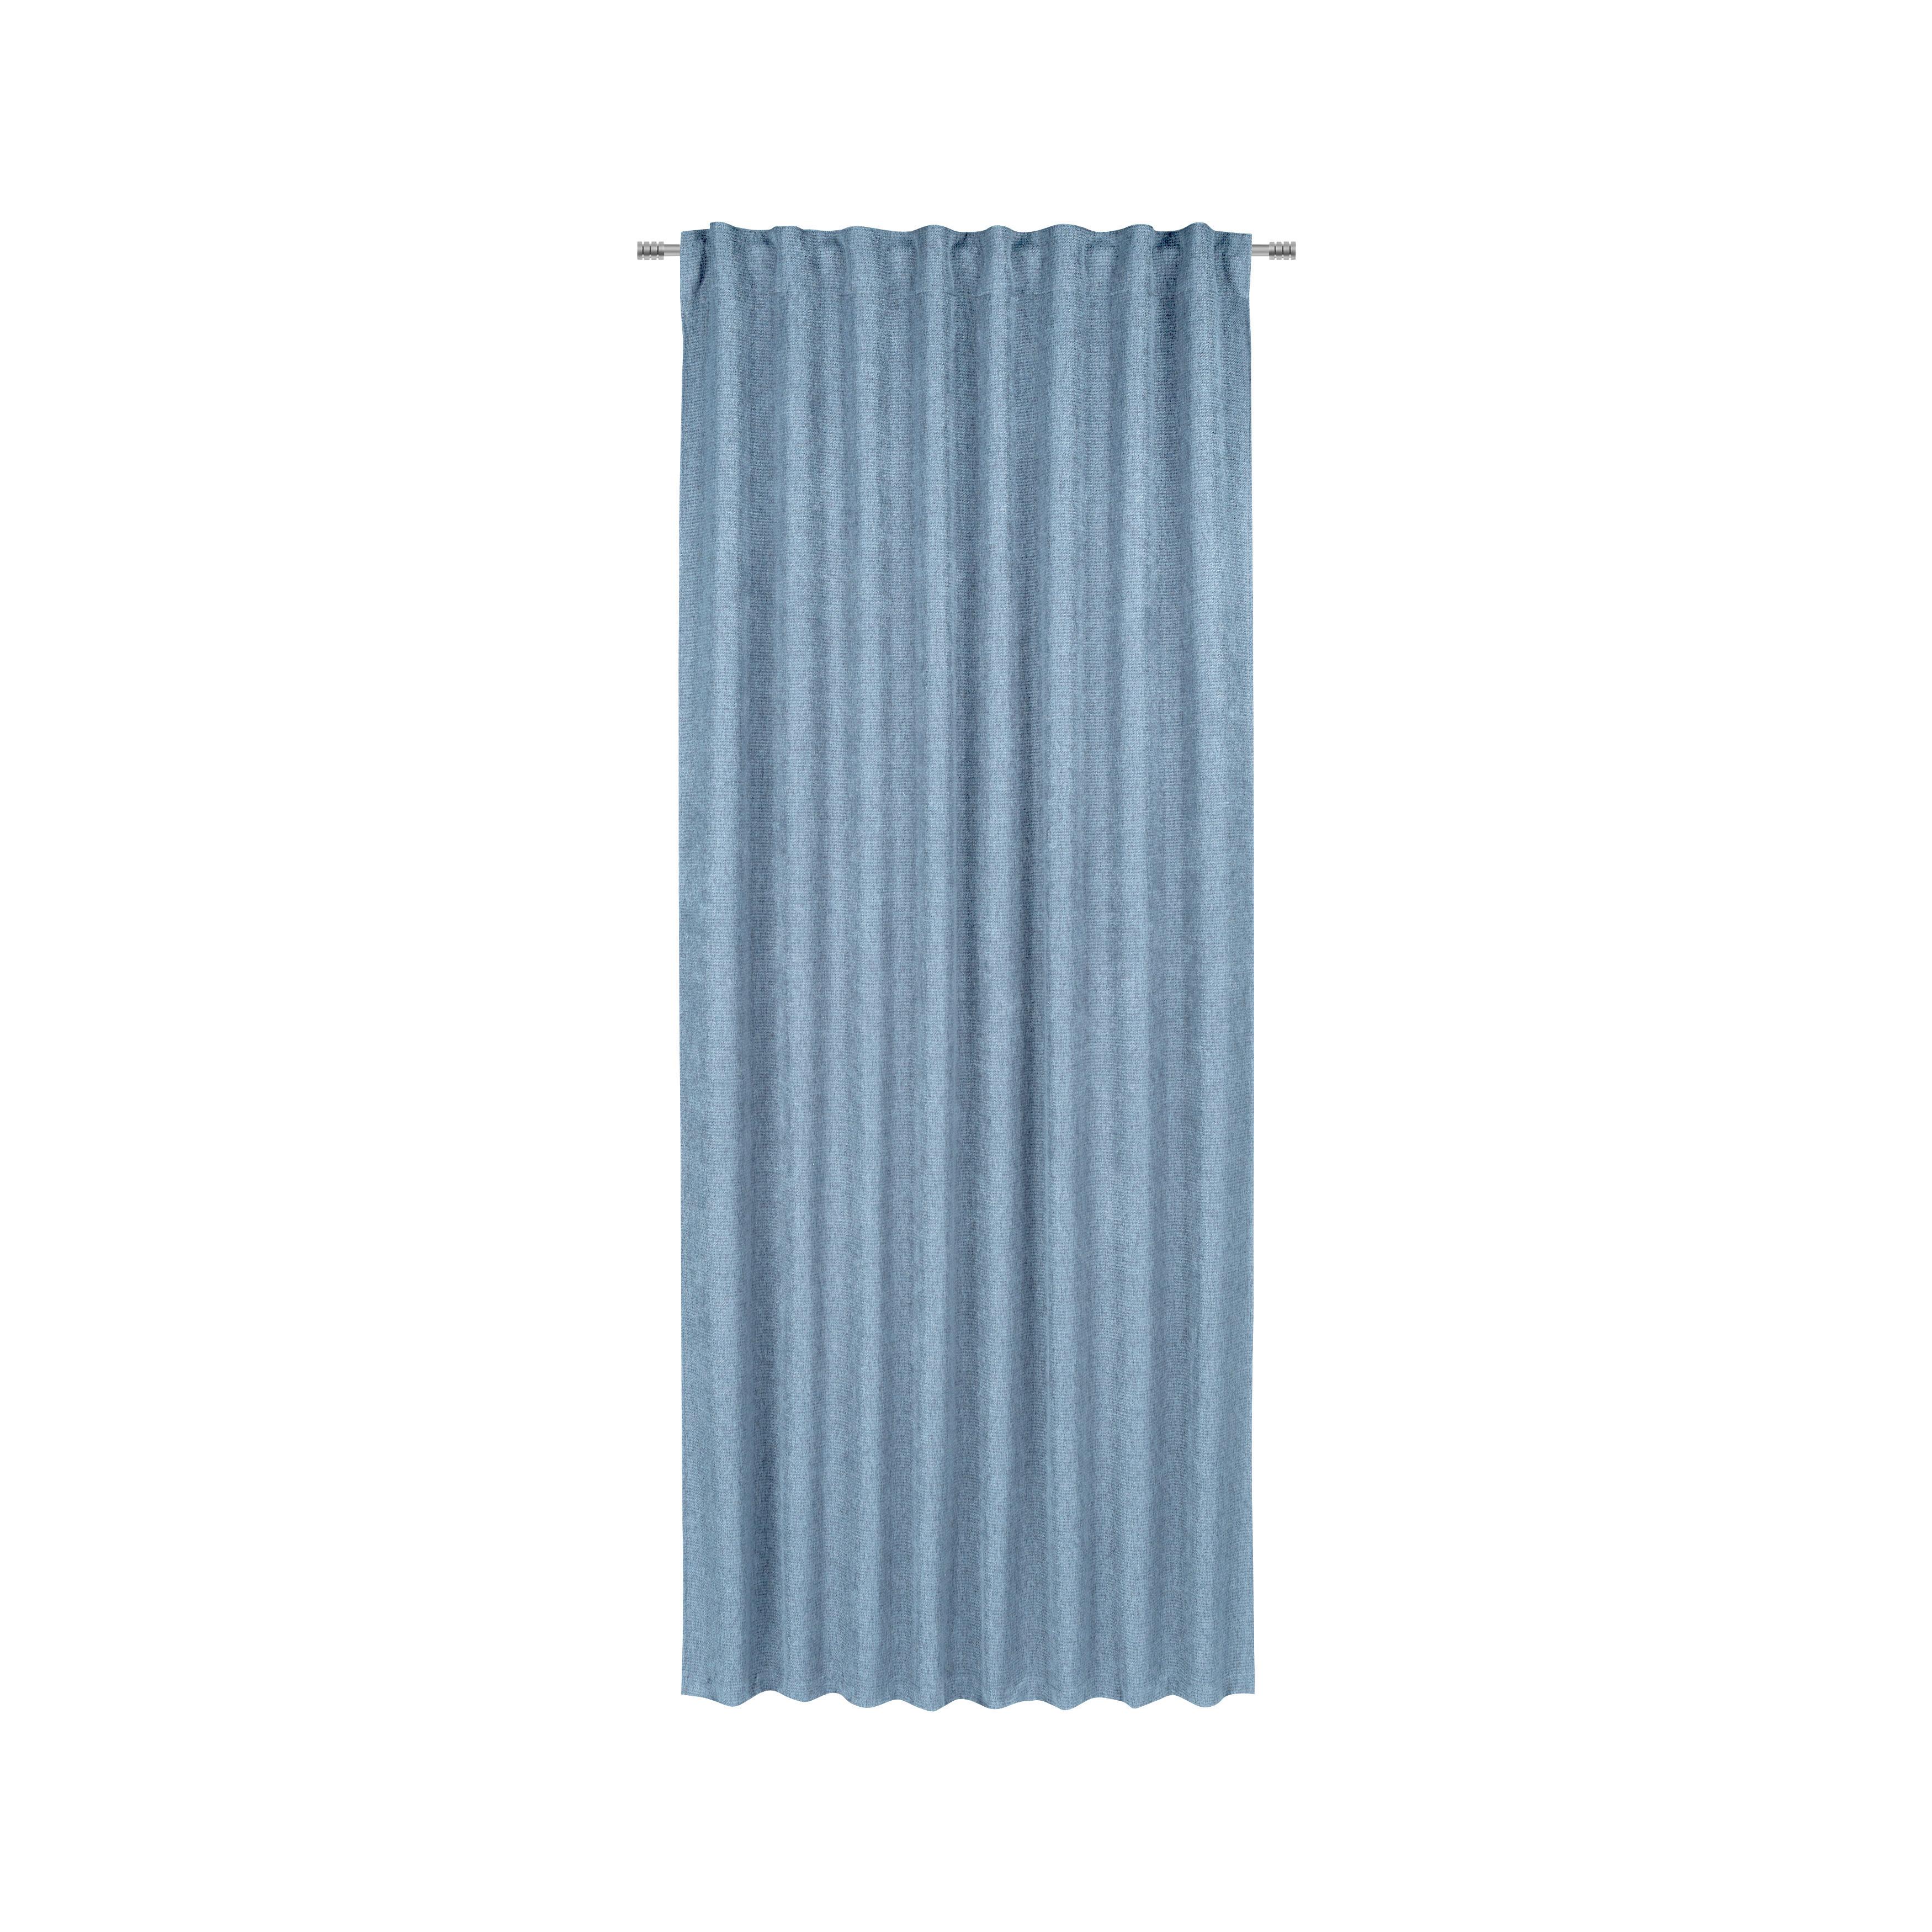 Zatemnitvena Zavesa Valentin - modra, Konvencionalno, tekstil (135/255cm) - Premium Living